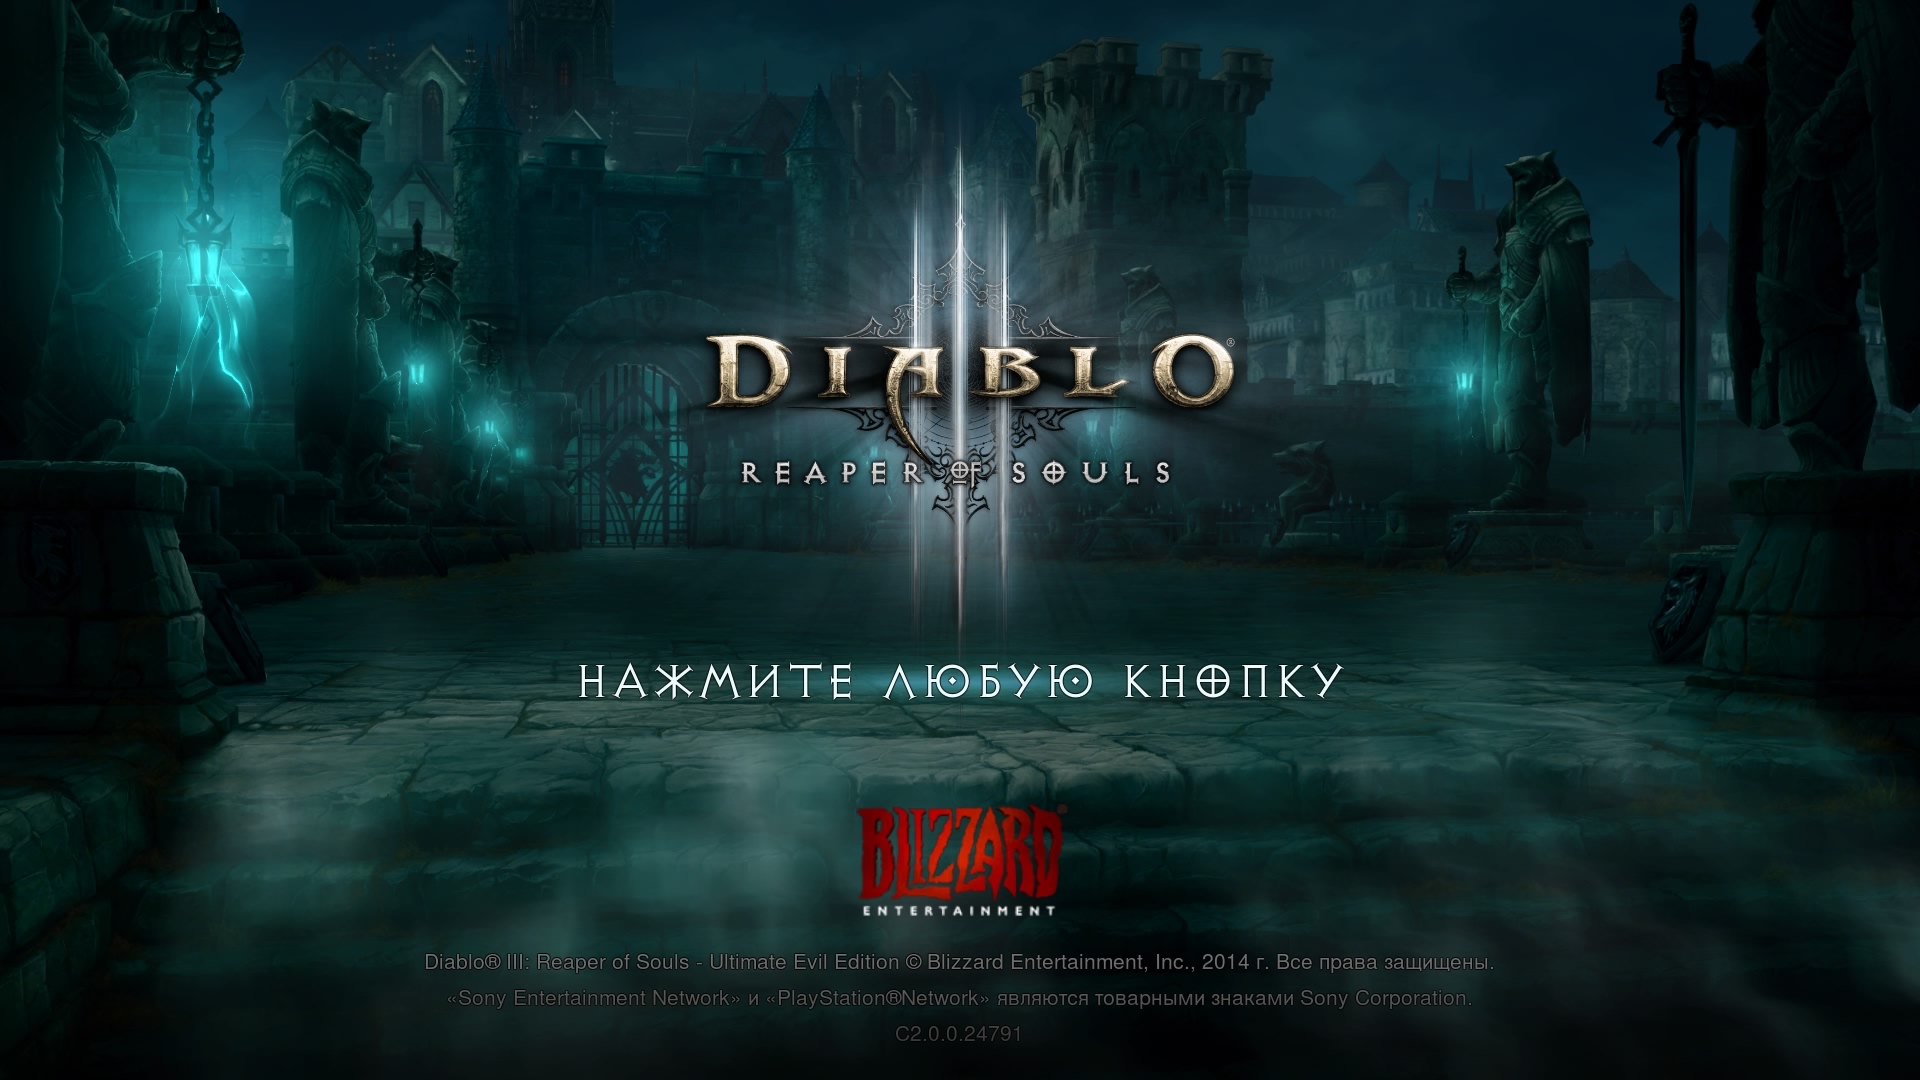 Diablo III Reaper of Souls Ultimate Evil Edition